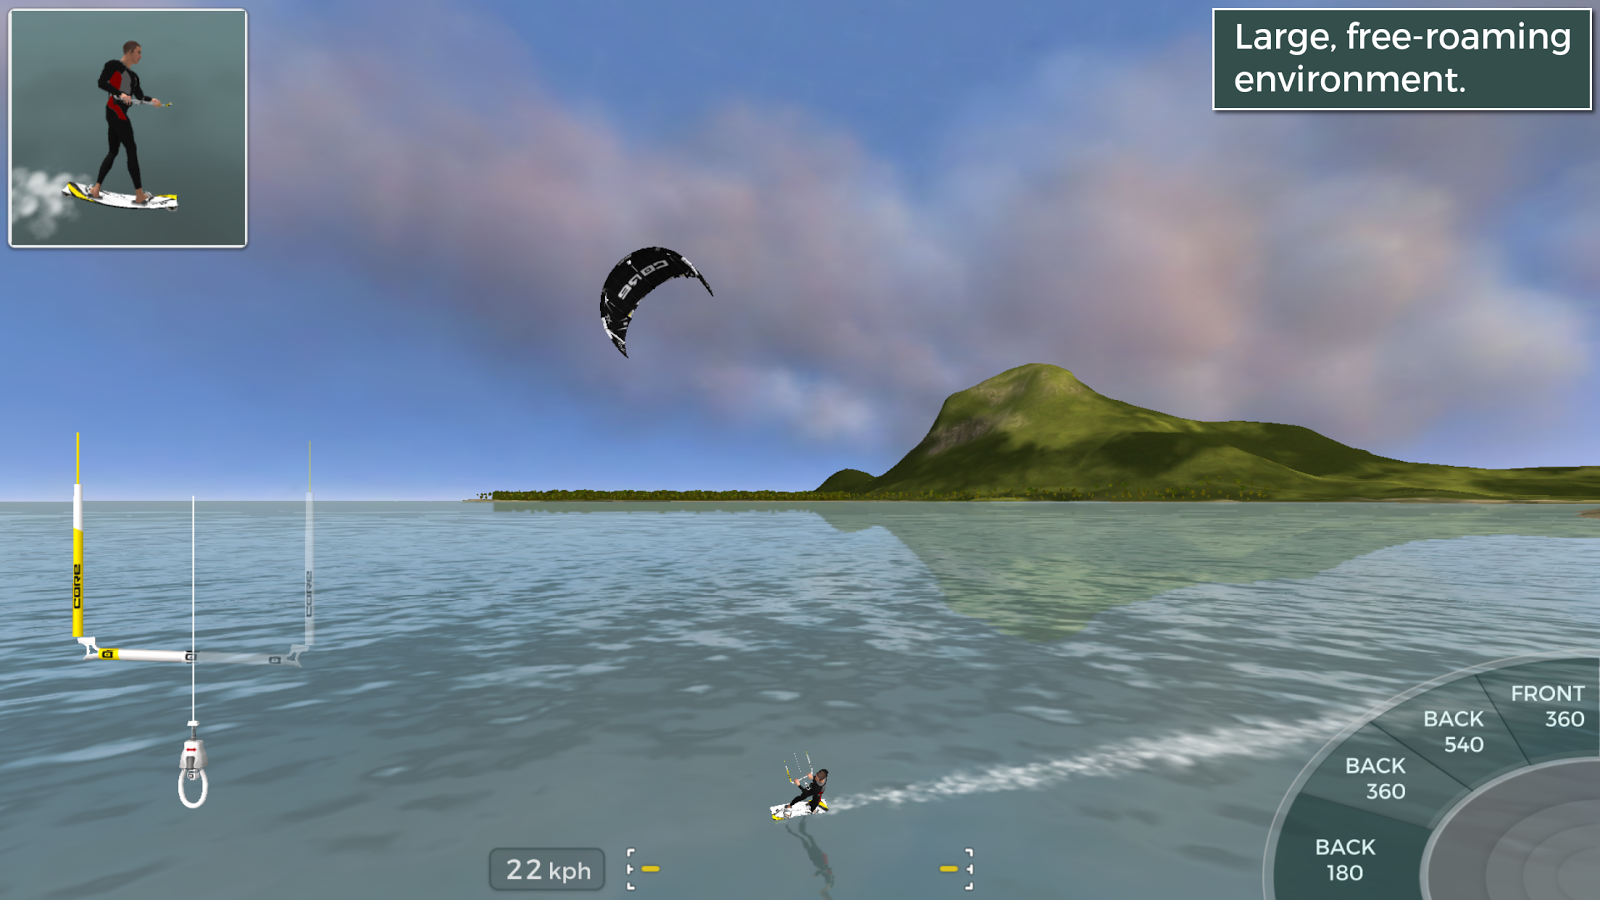    Kiteboard Hero- screenshot  